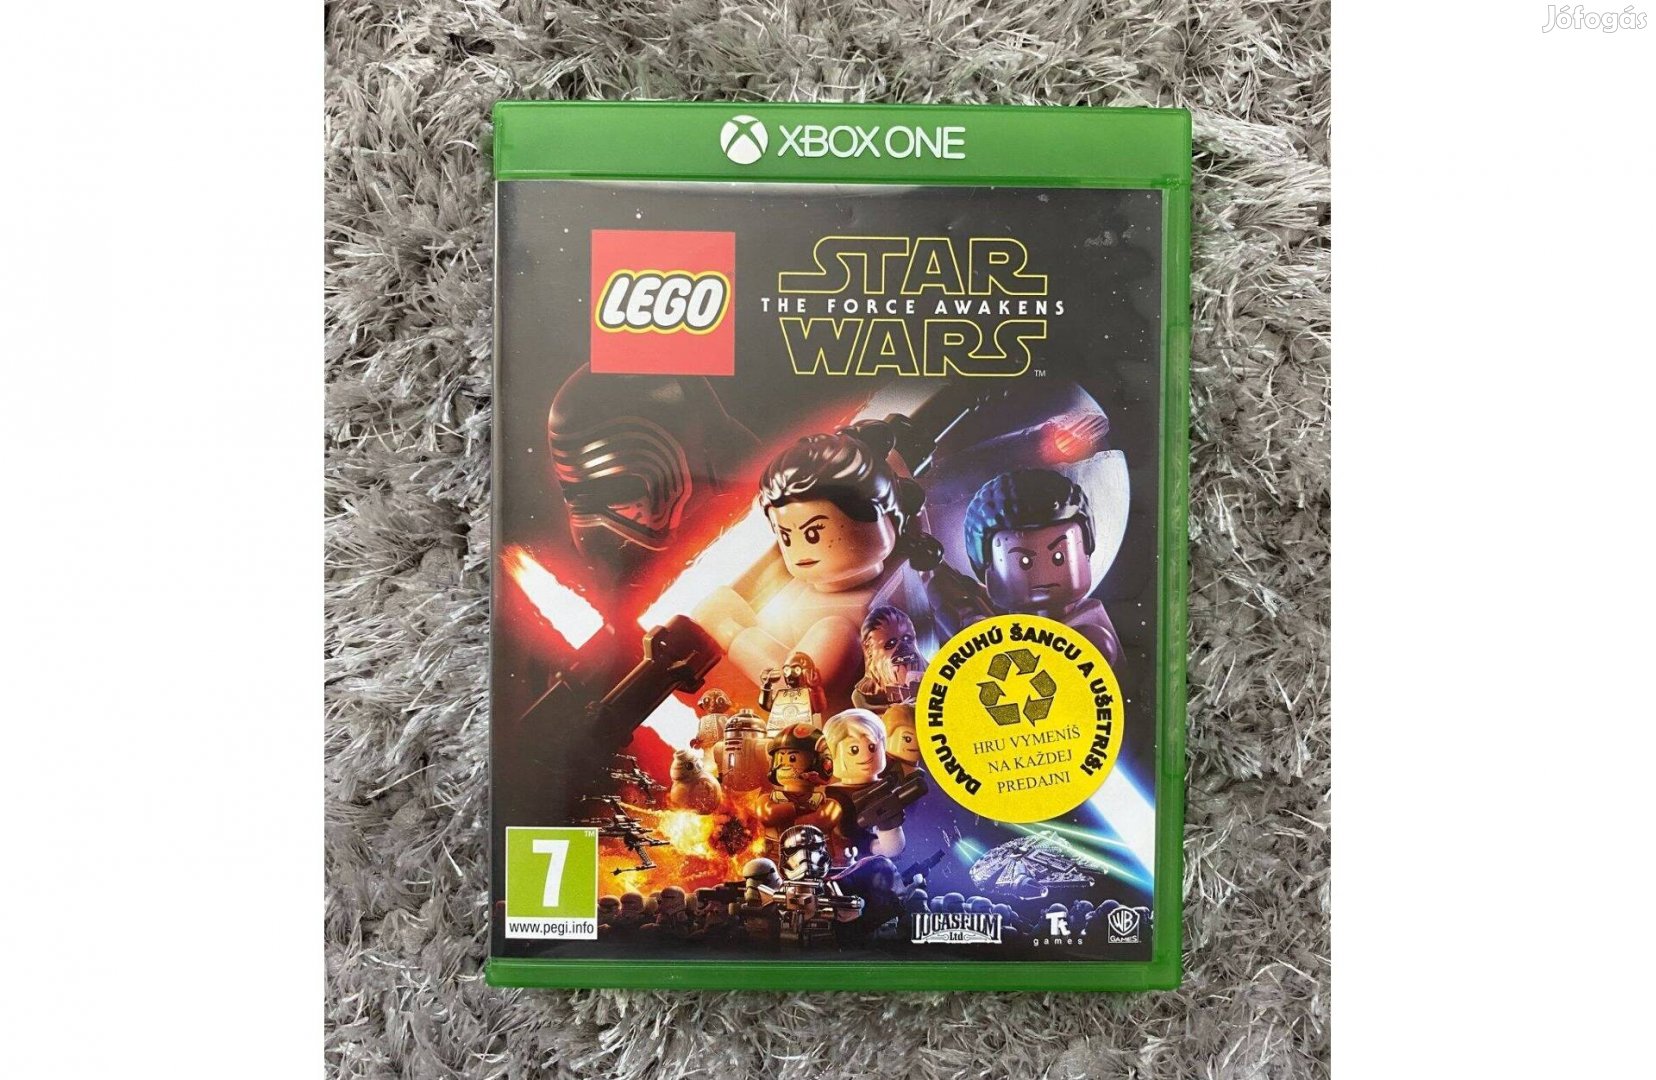 Lego Star Wars, The Force Awakens, Xbox one konzolhoz eladó